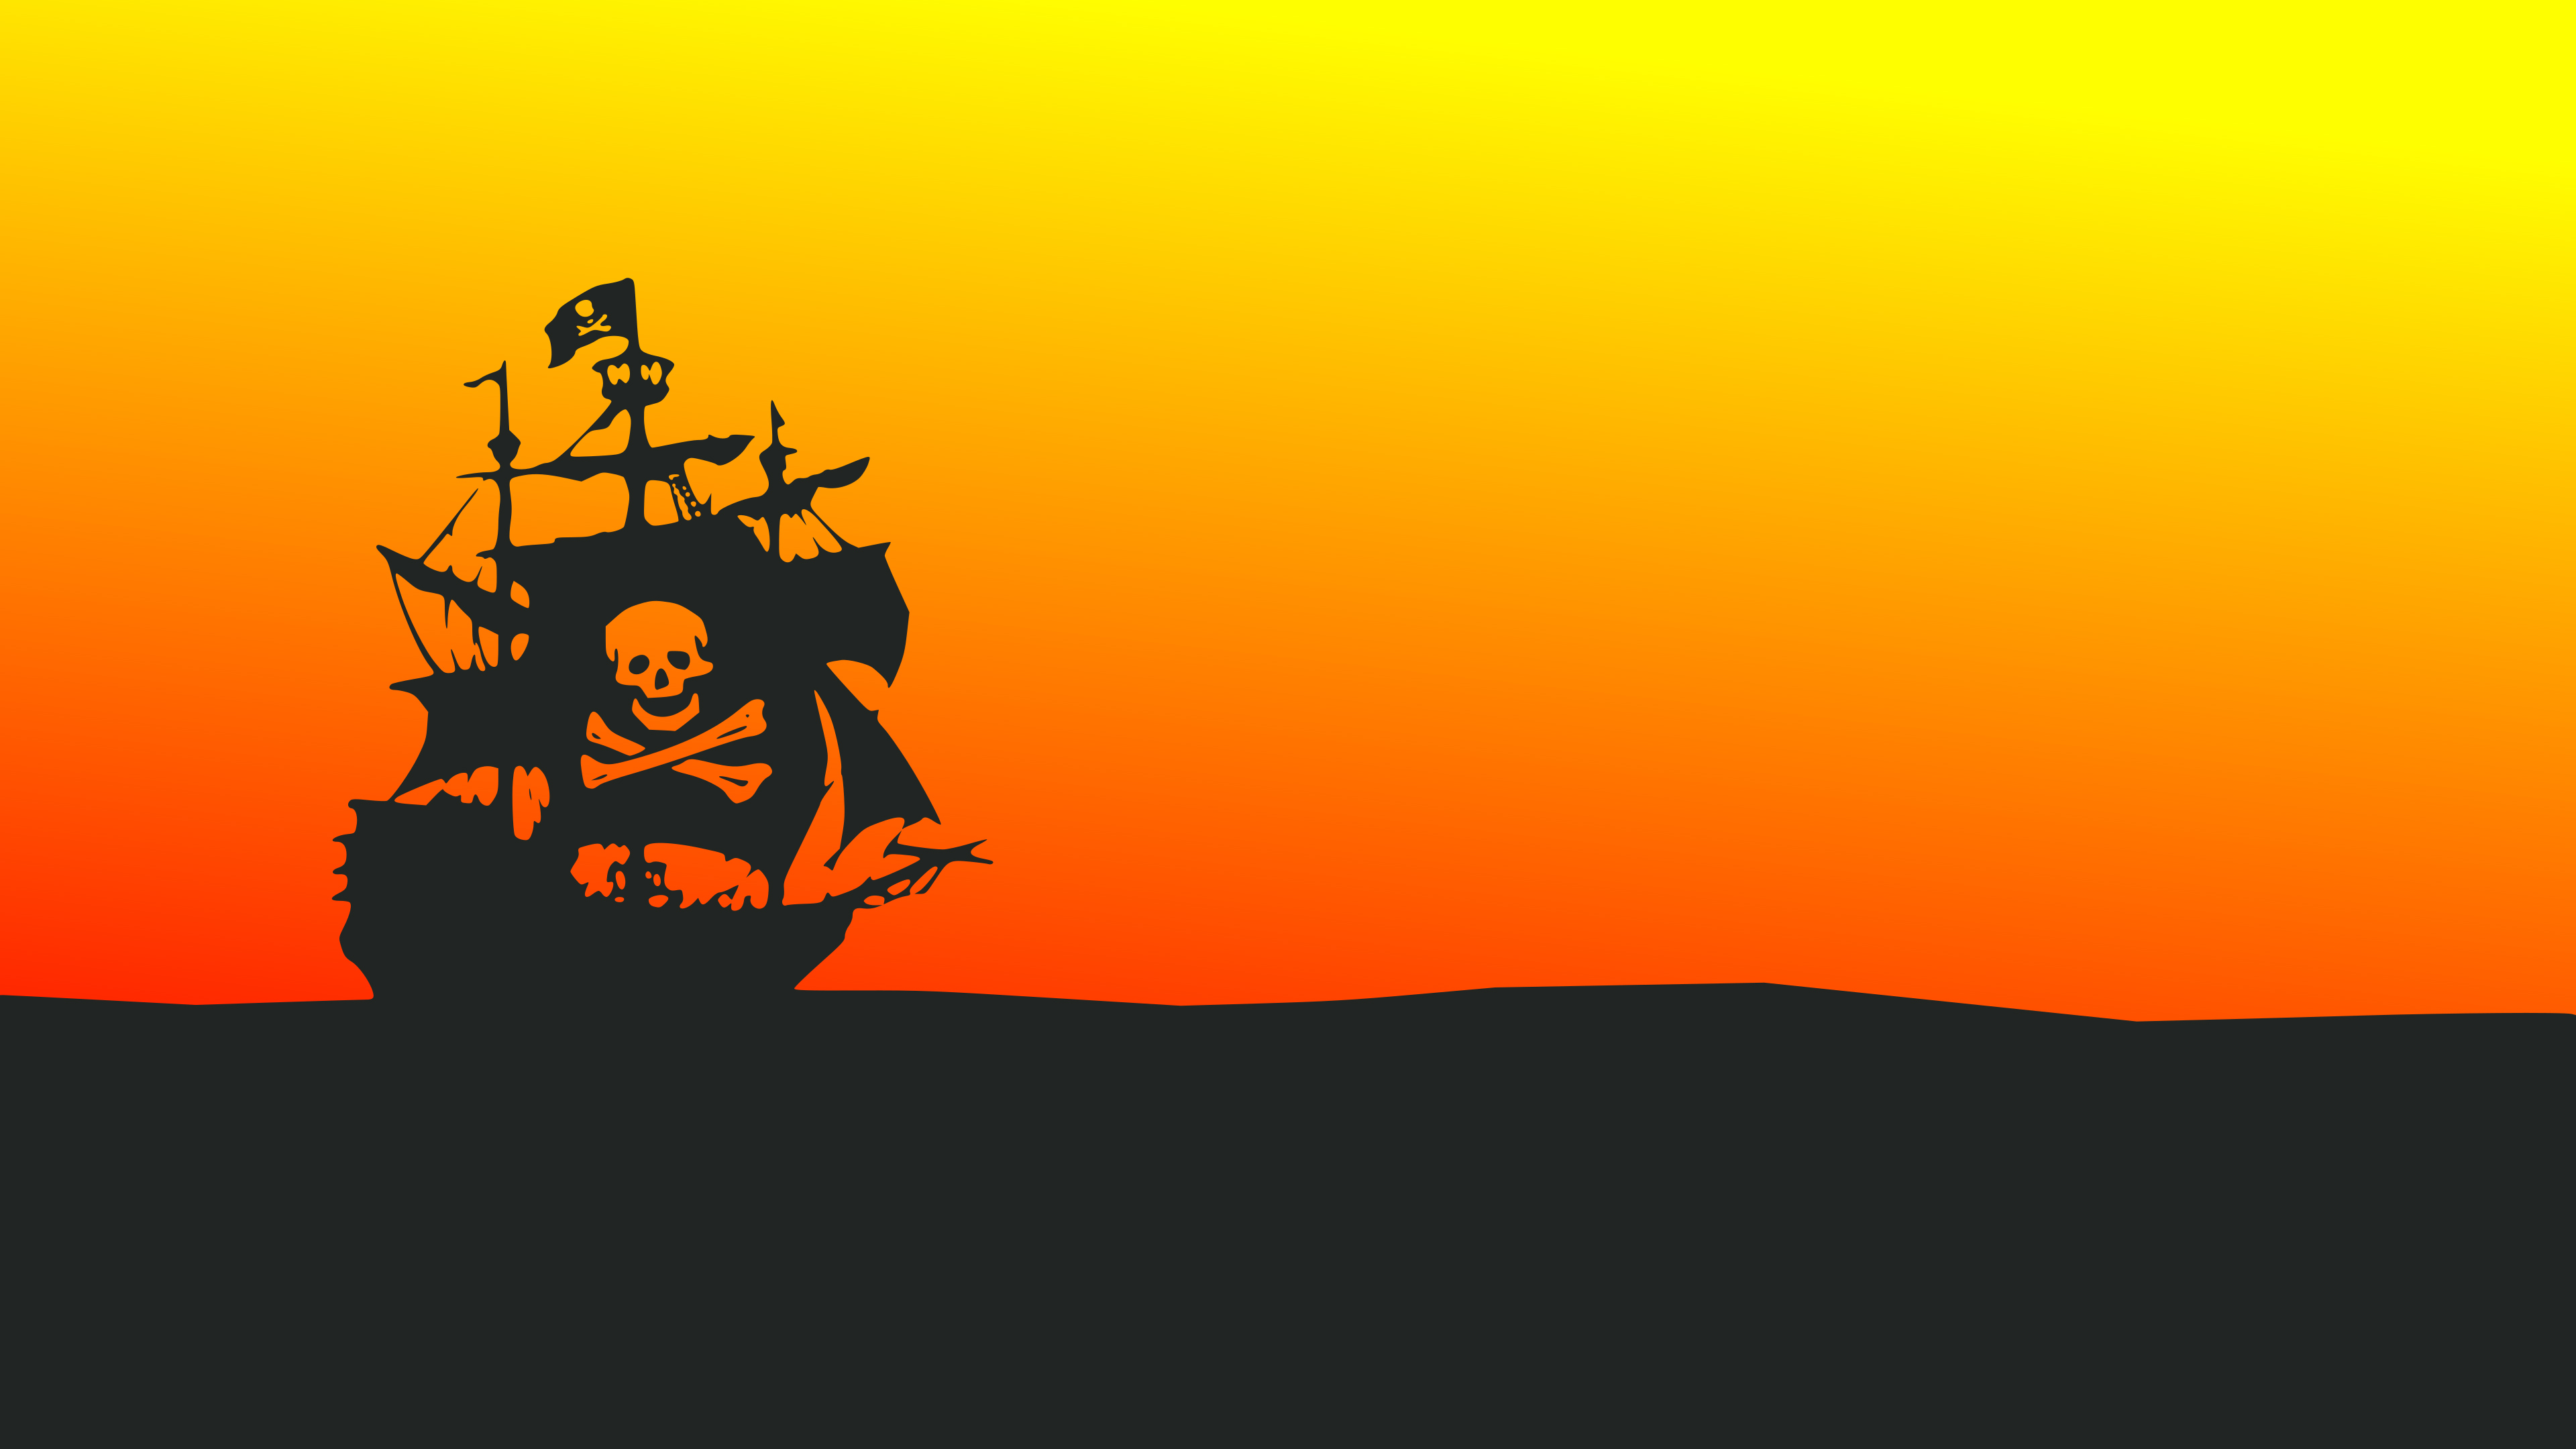 929020 descargar imagen tecnología, la bahia pirata, barco, atardecer: fondos de pantalla y protectores de pantalla gratis